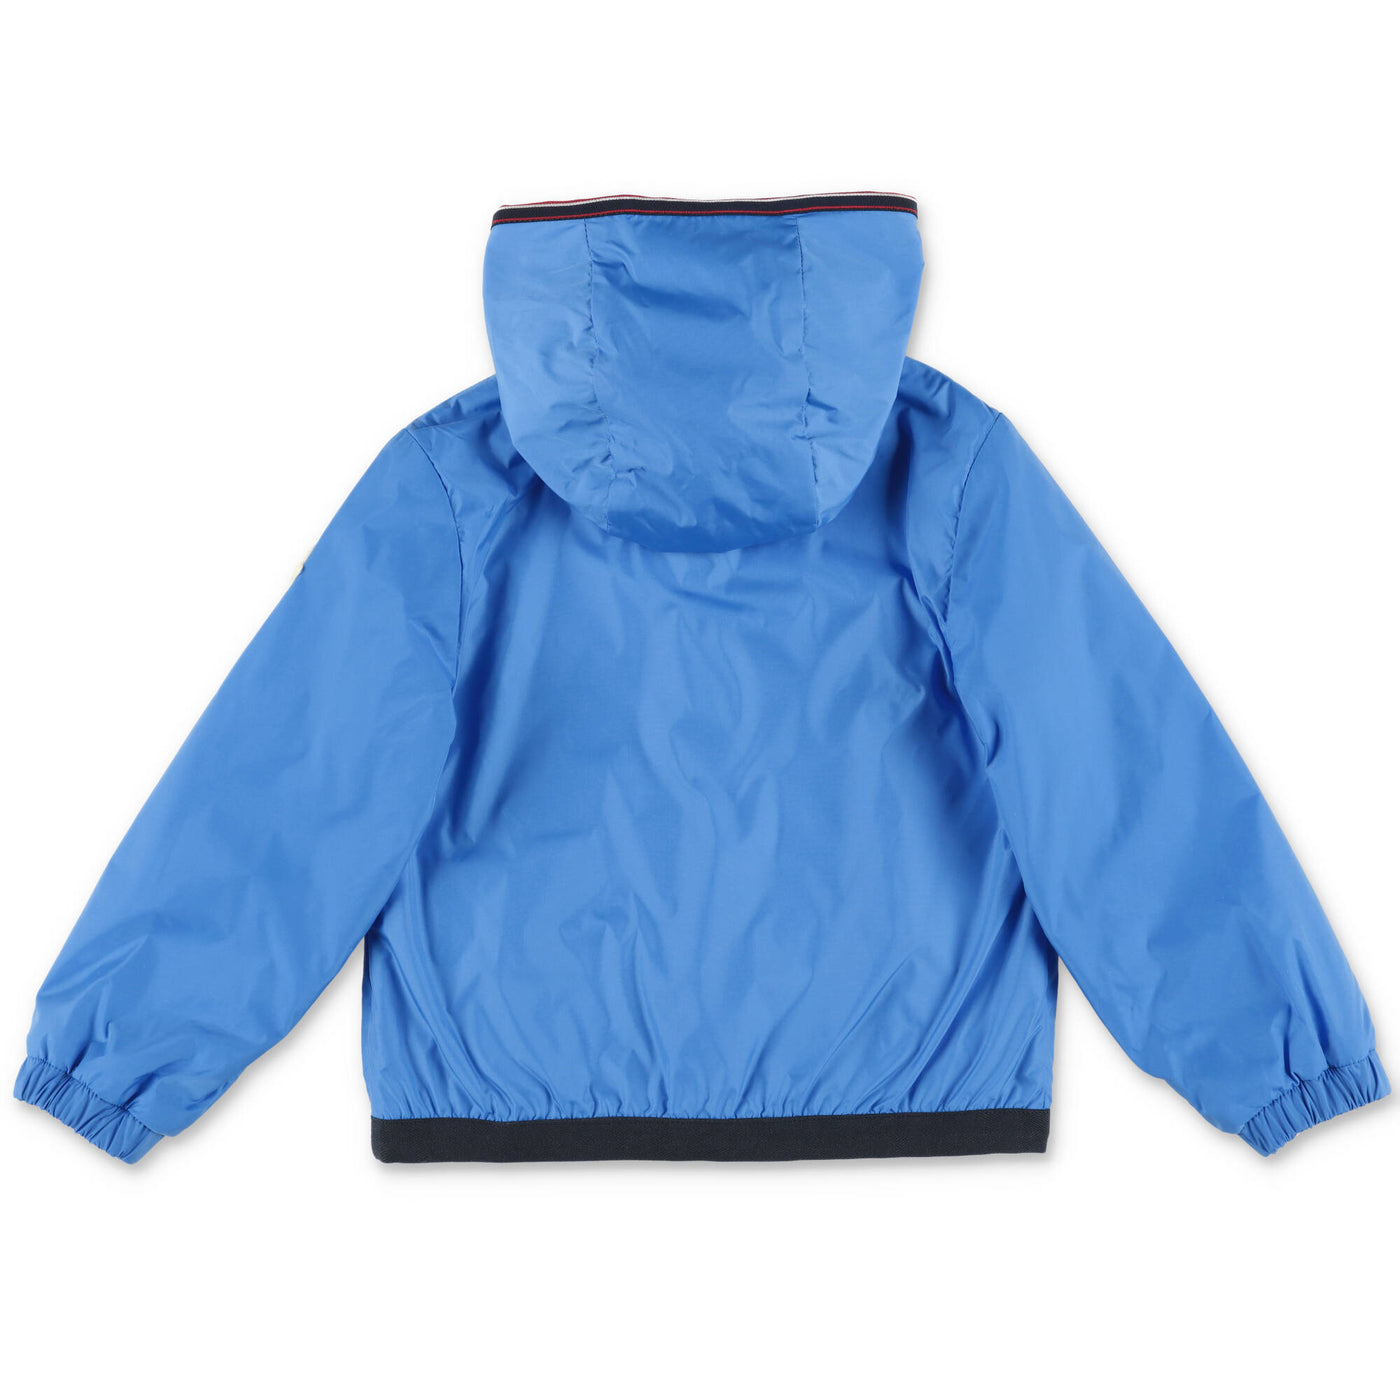 ANTON royal blue nylon baby boy MONCLER jacket with hood